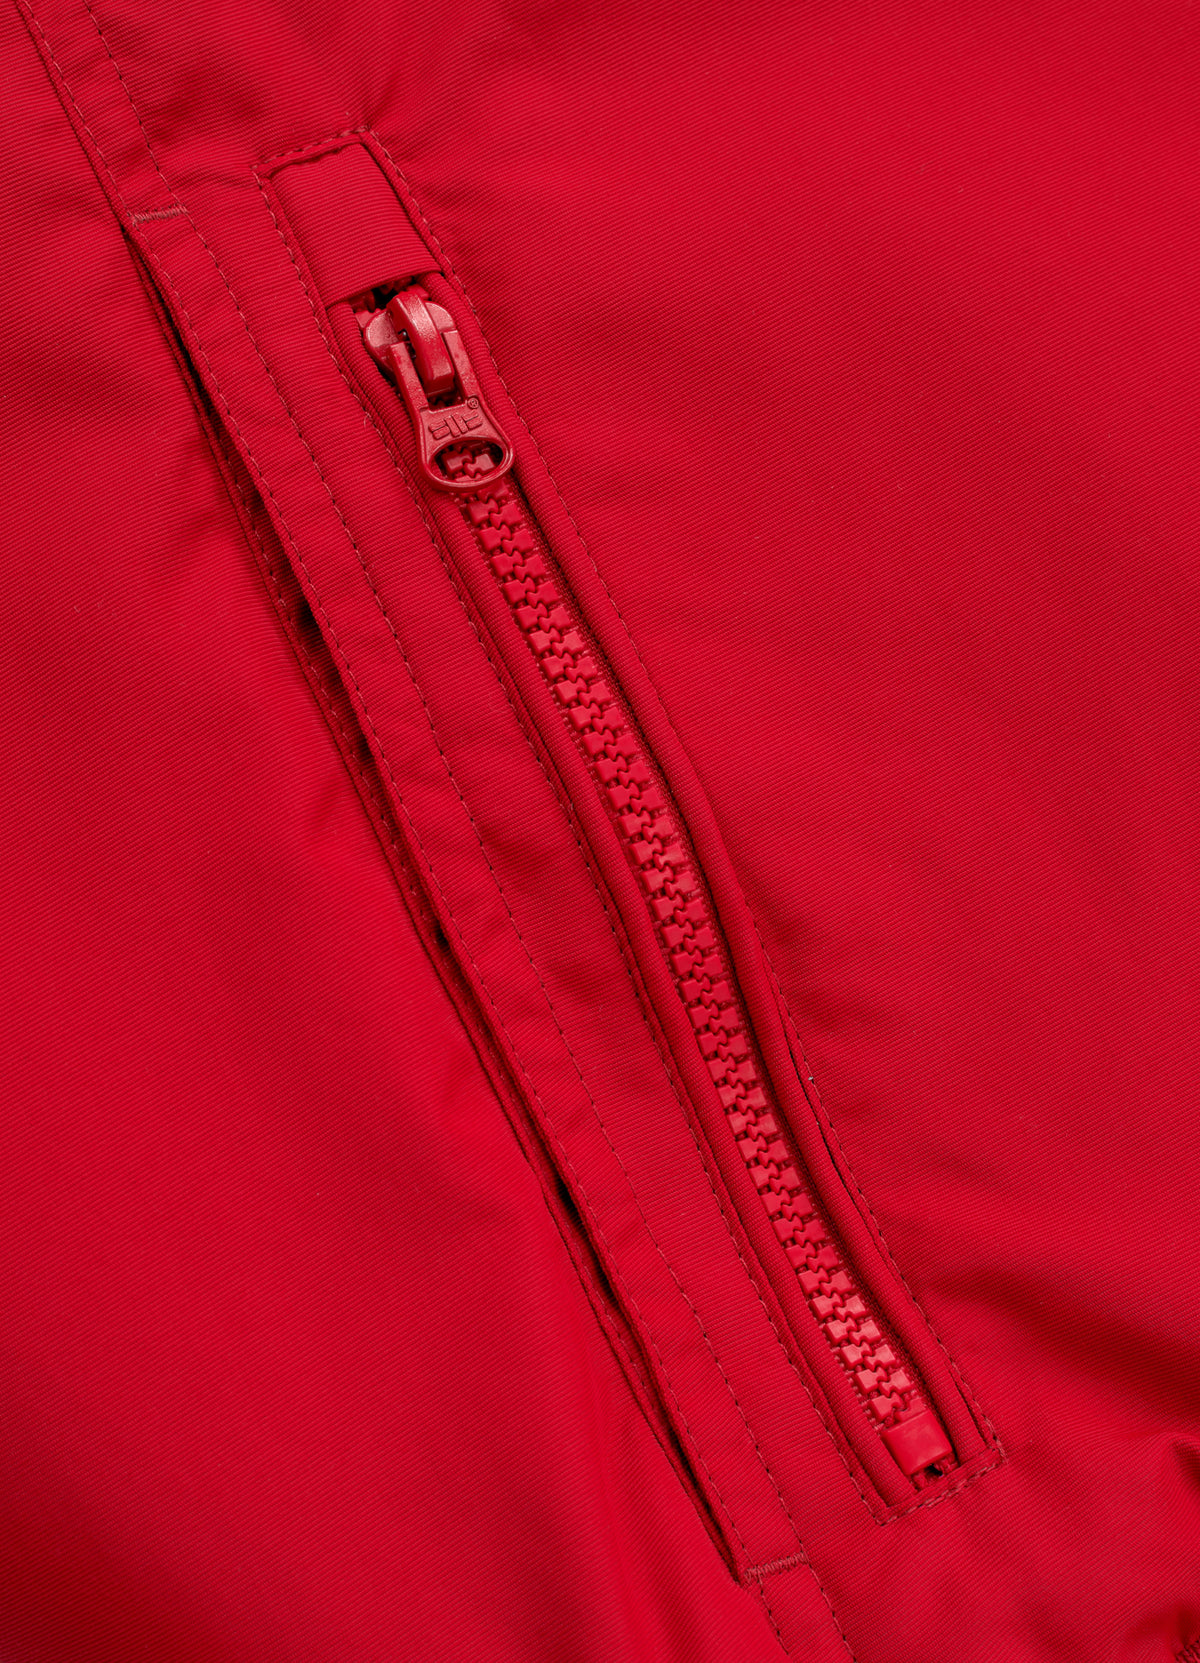 CABRILLO Red Winter Jacket.